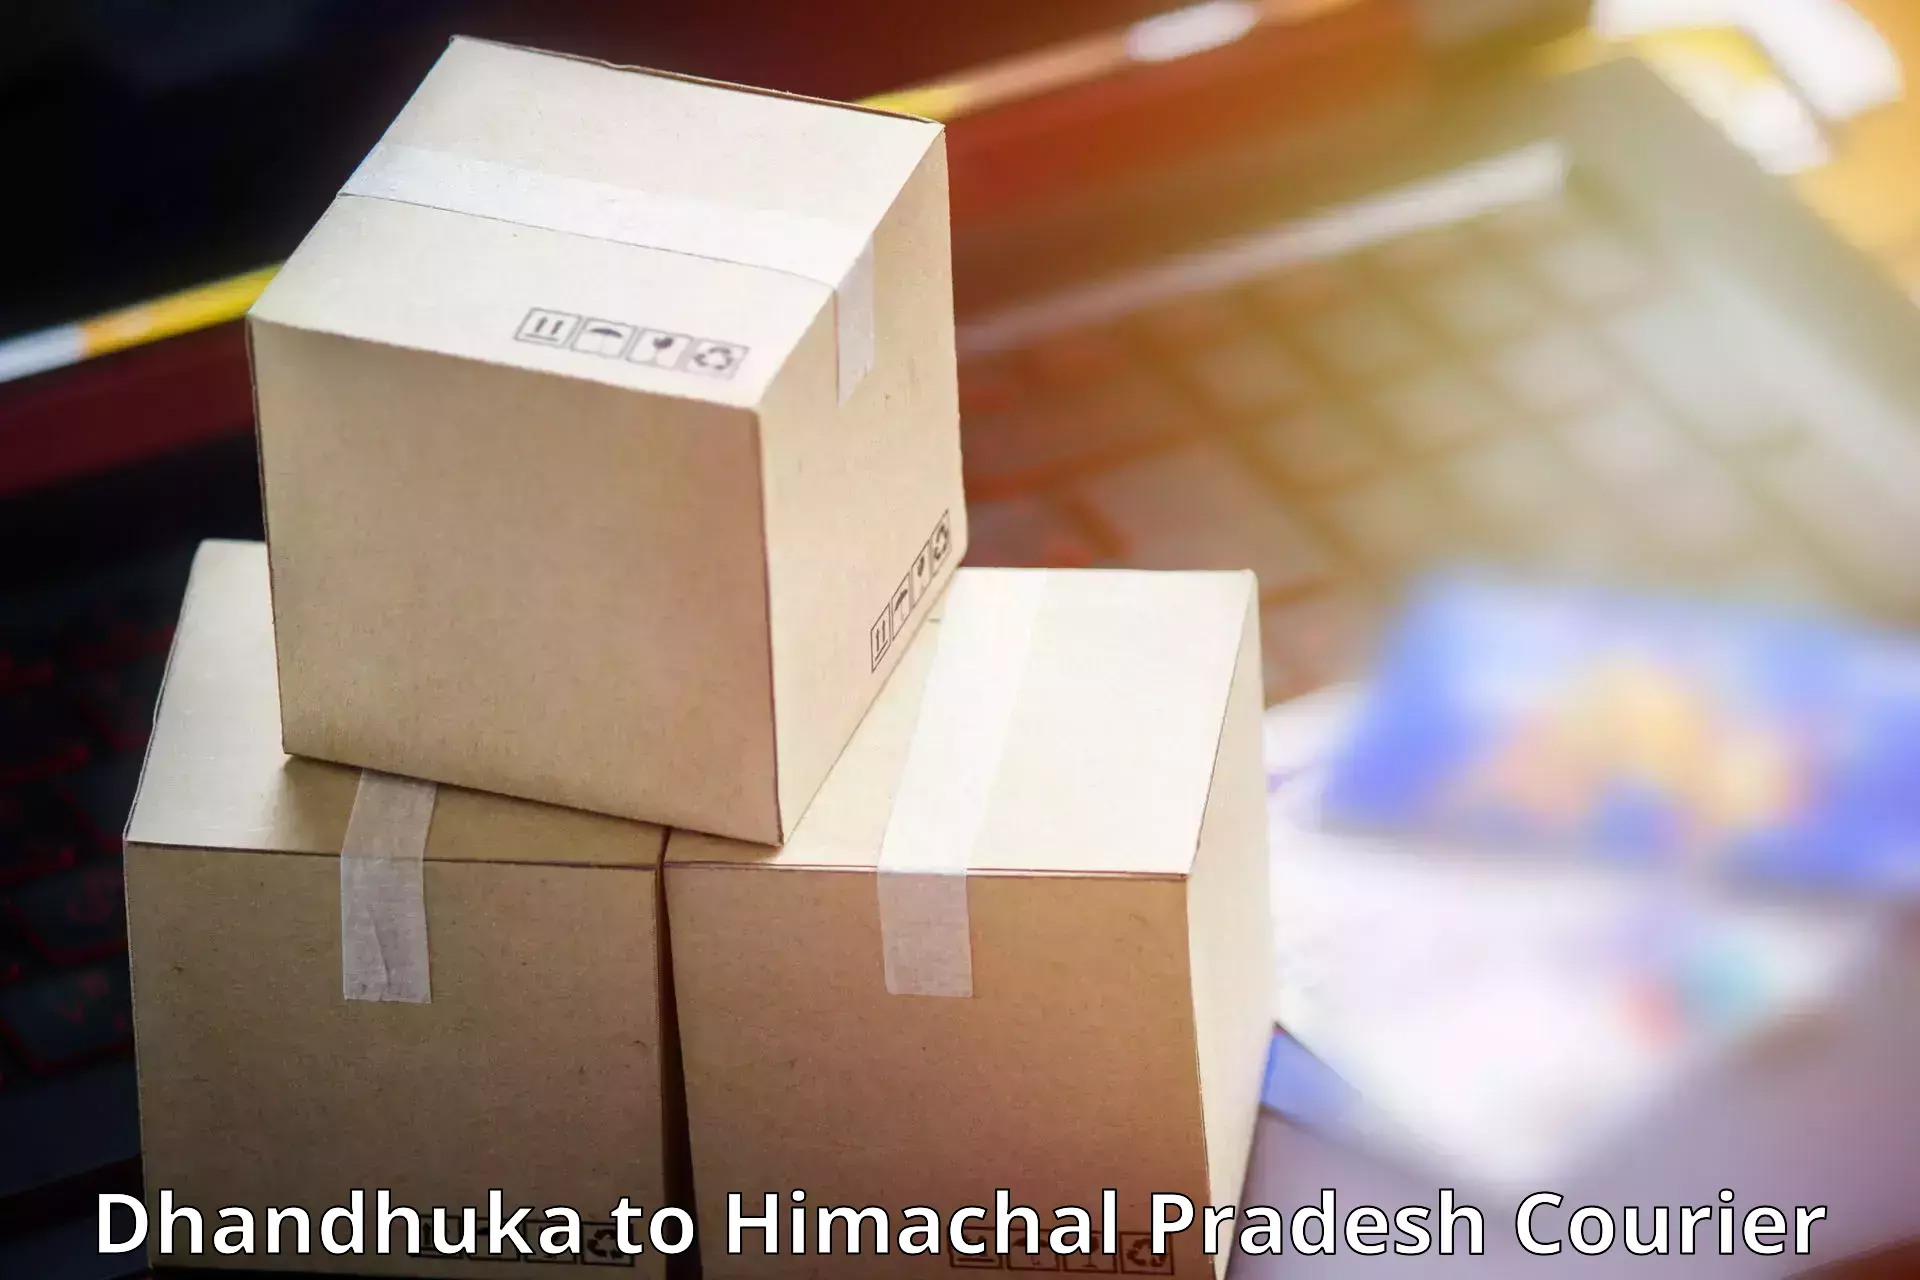 International parcel service Dhandhuka to Indora